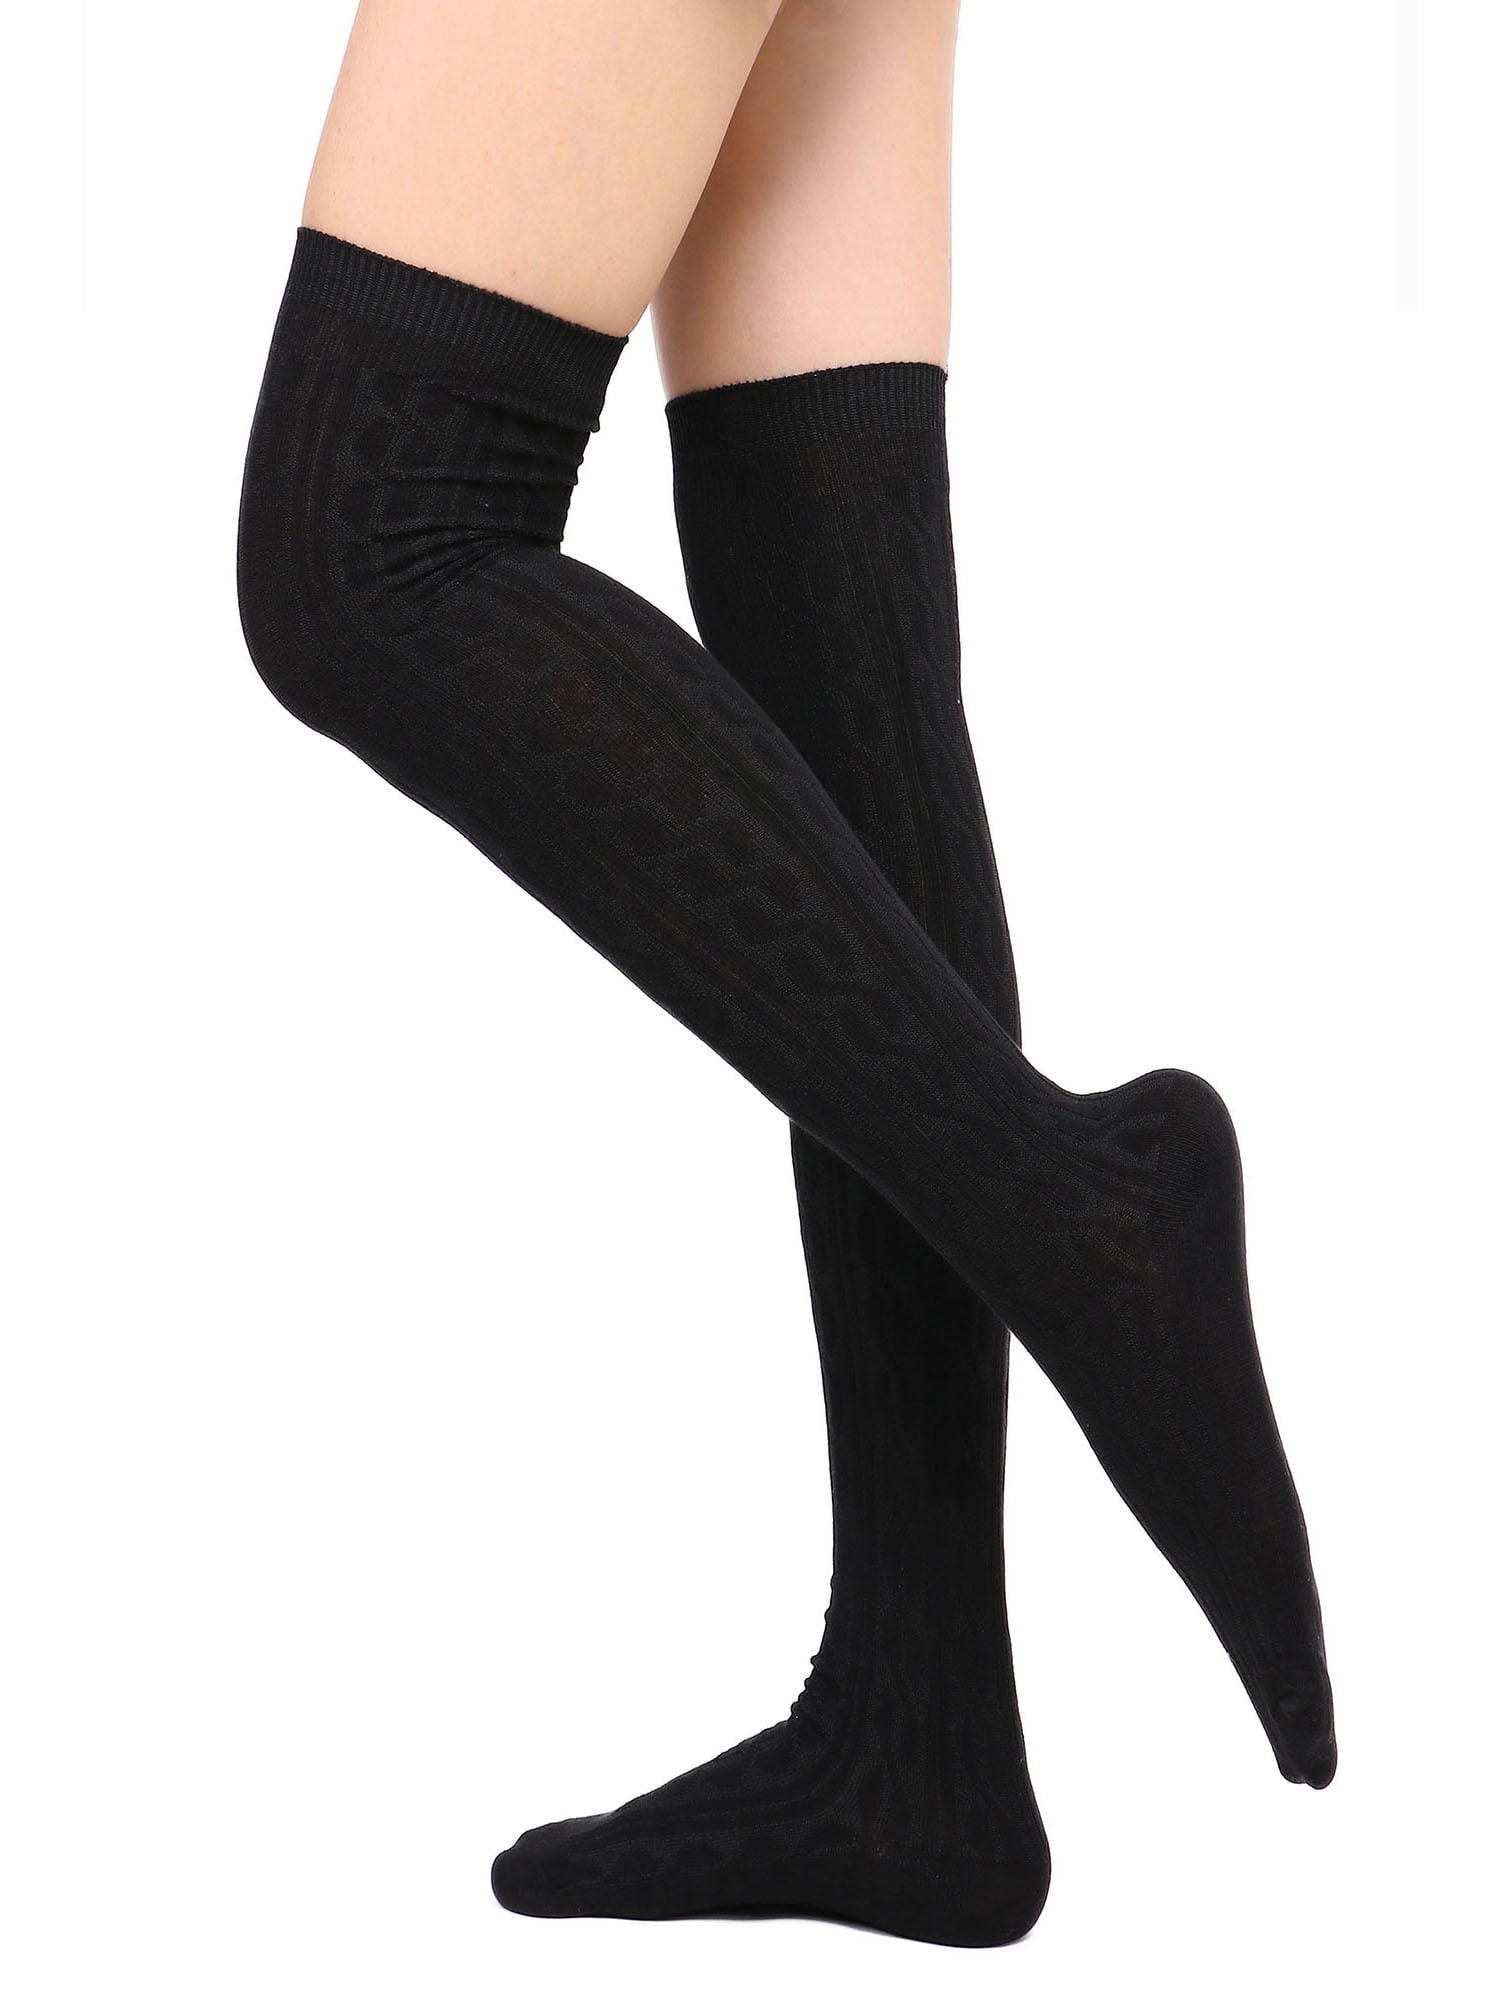 Womens Girls Black Thigh High Socks Plus Size Striped Over Knee High Socks Winter Warm Extra Soft Long Knit Wool Leg Warmers